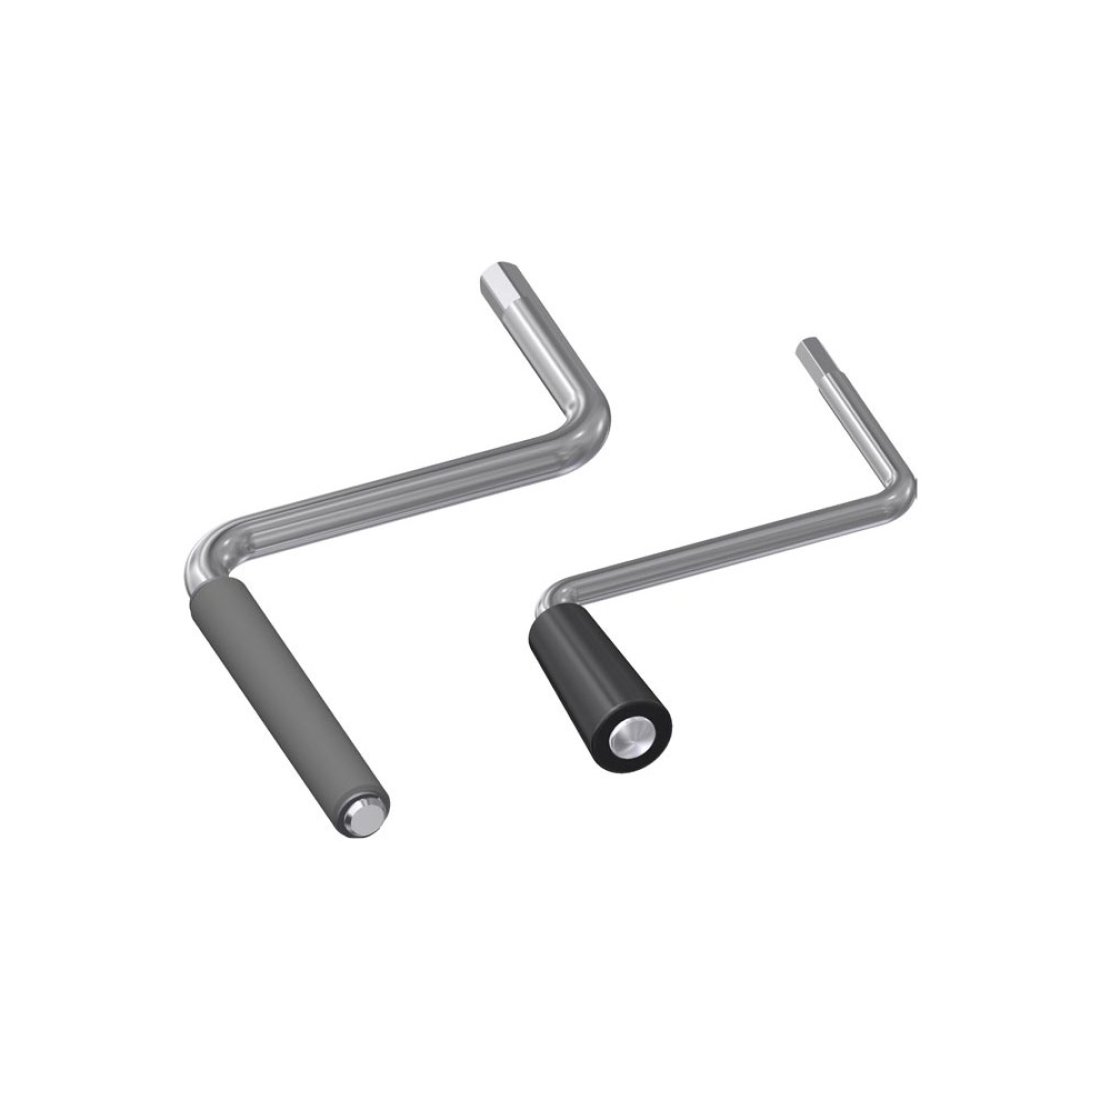 Metal handle, Stainless steel grip - All industrial manufacturers